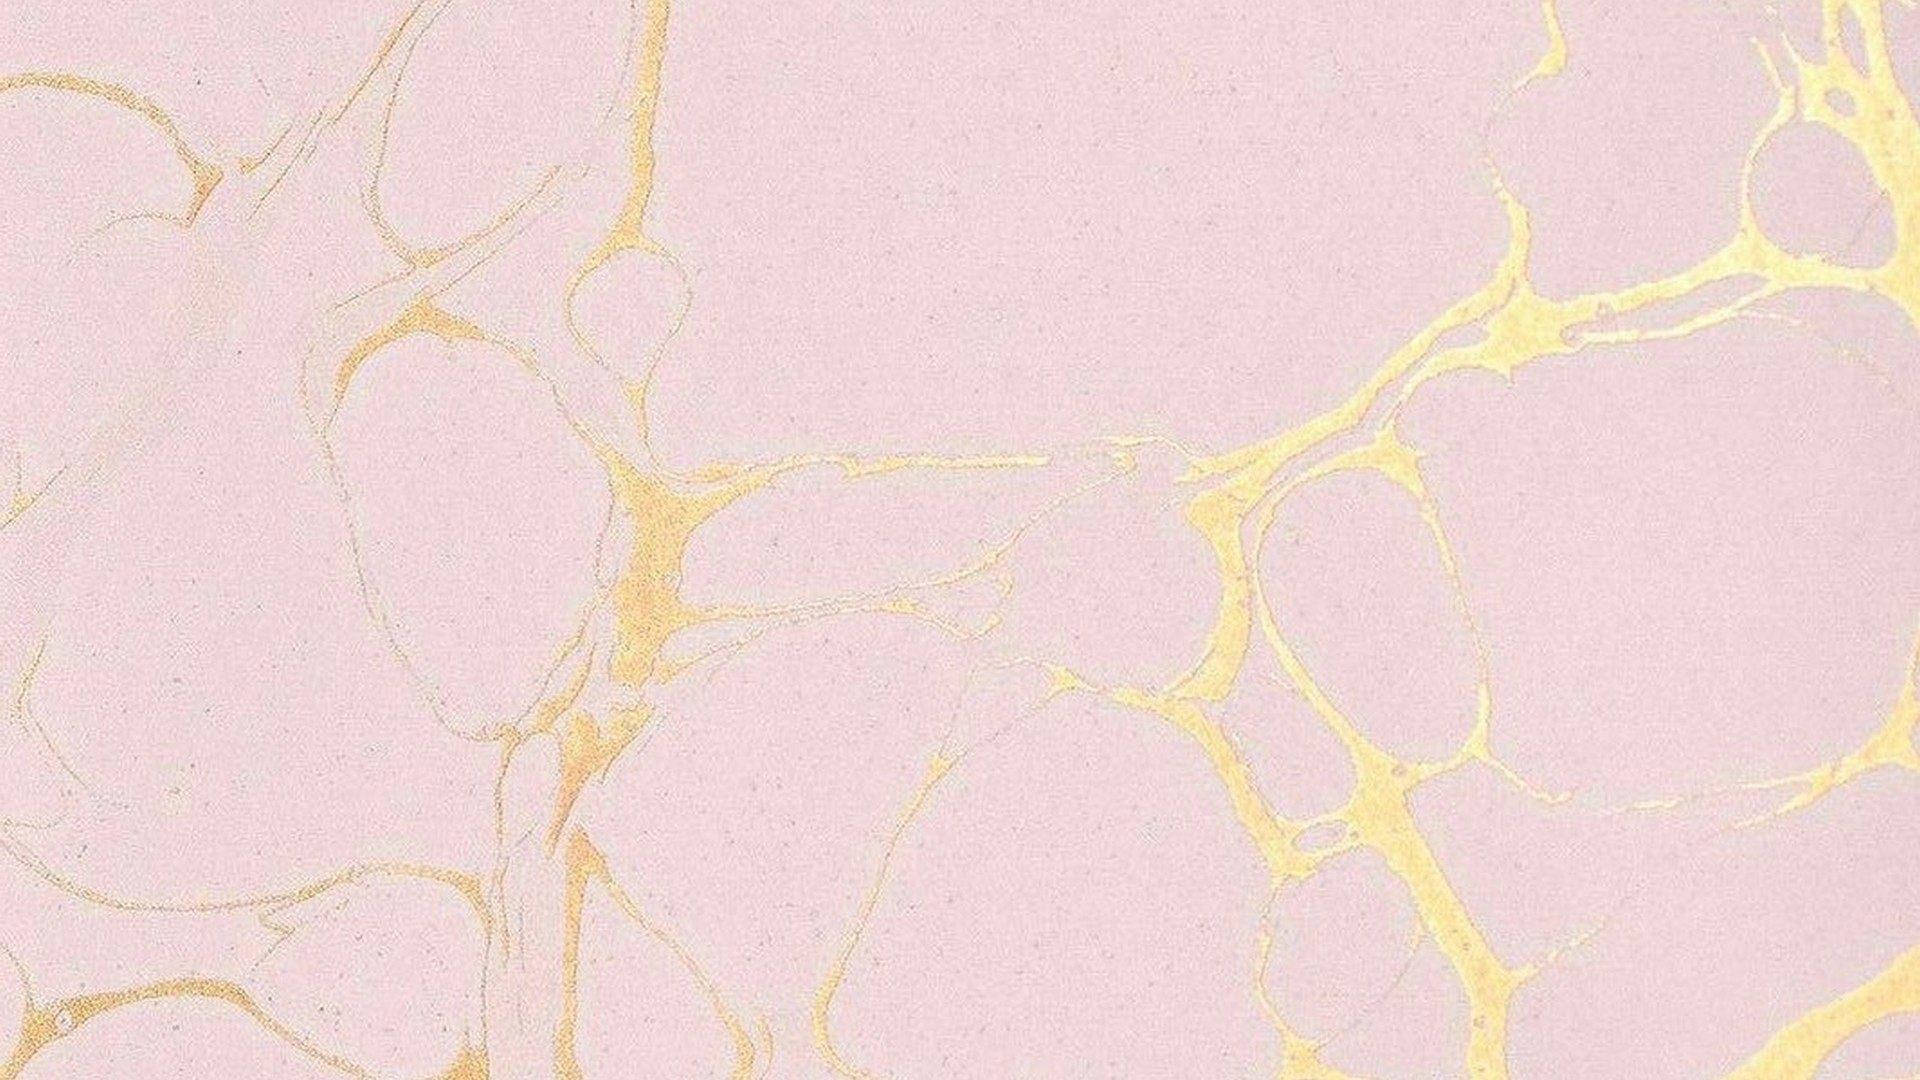  Madchenhaft Hintergrundbild 1920x1080. Goldene Ästhetik Wallpaper Kostenlos Downloaden, Goldene Ästhetik Wallpaper Kostenlos